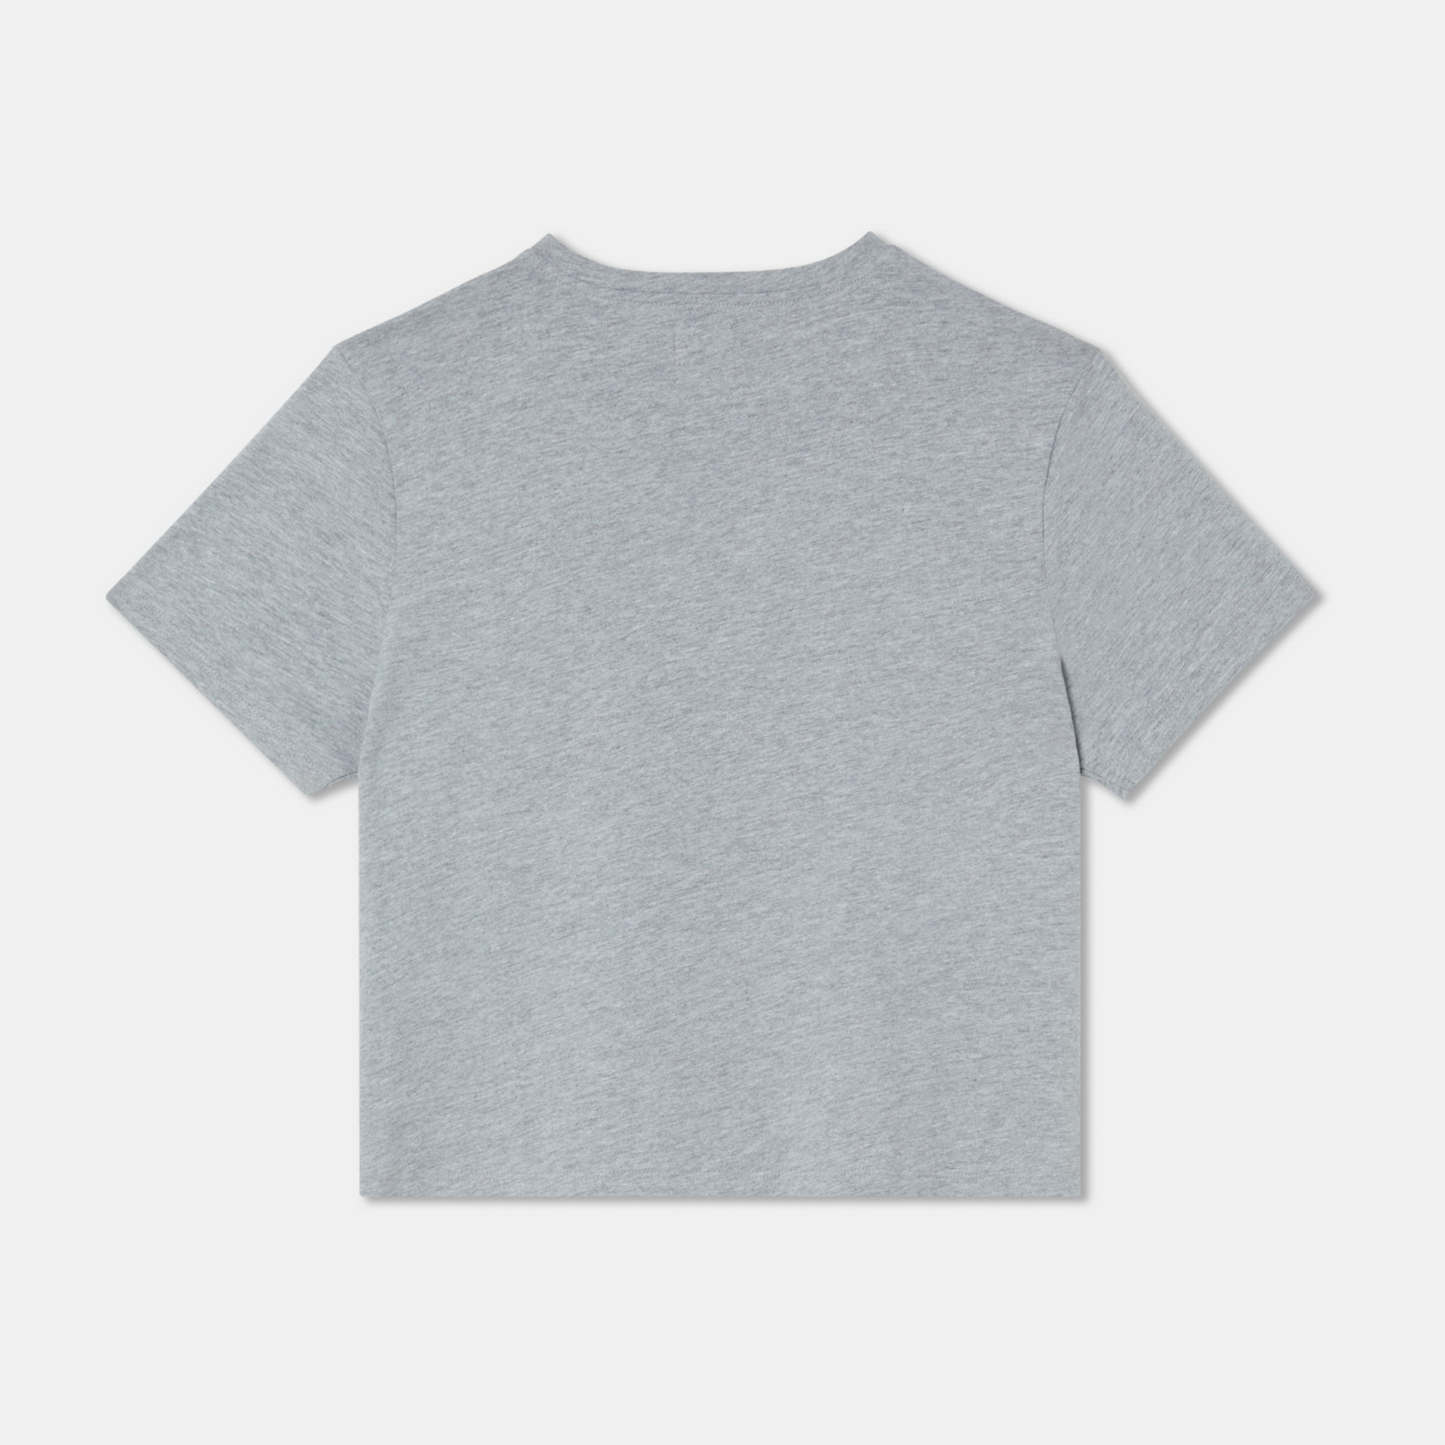 T-shirt middle crop grey back